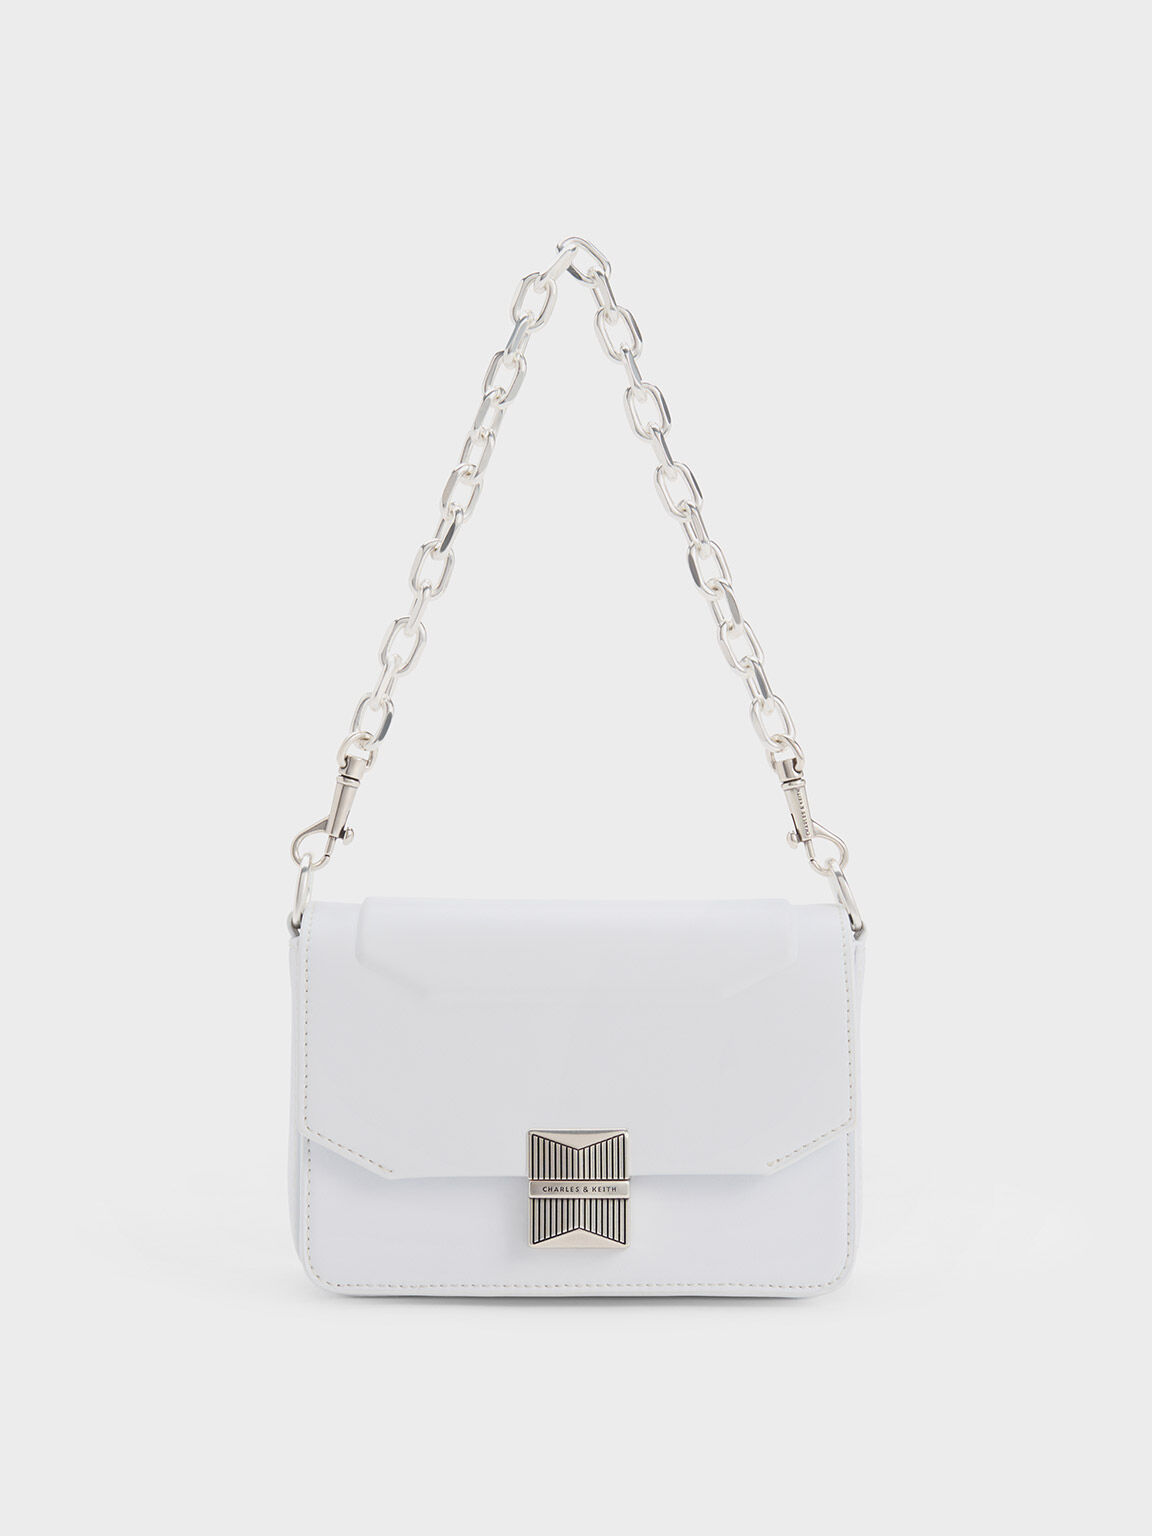 Charles & Keith Women's Geometric Boxy Top Handle Bag